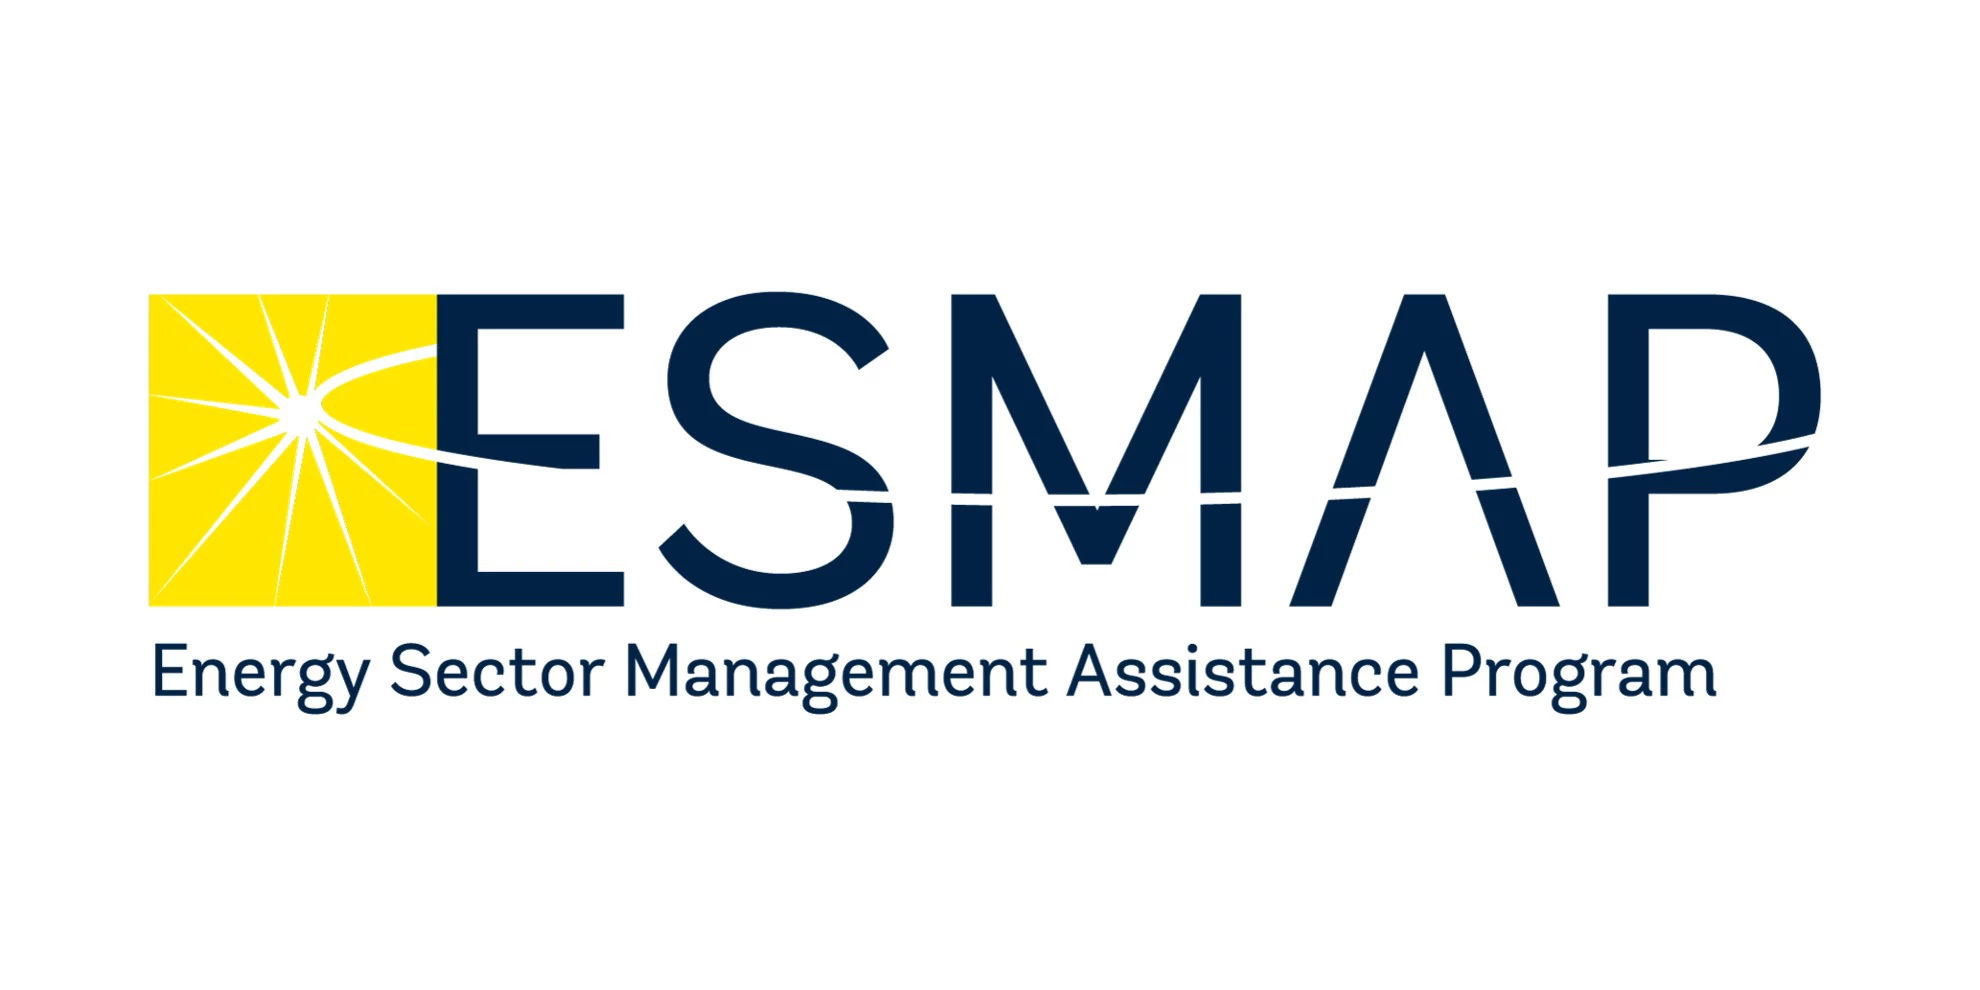 ESMAP Logo